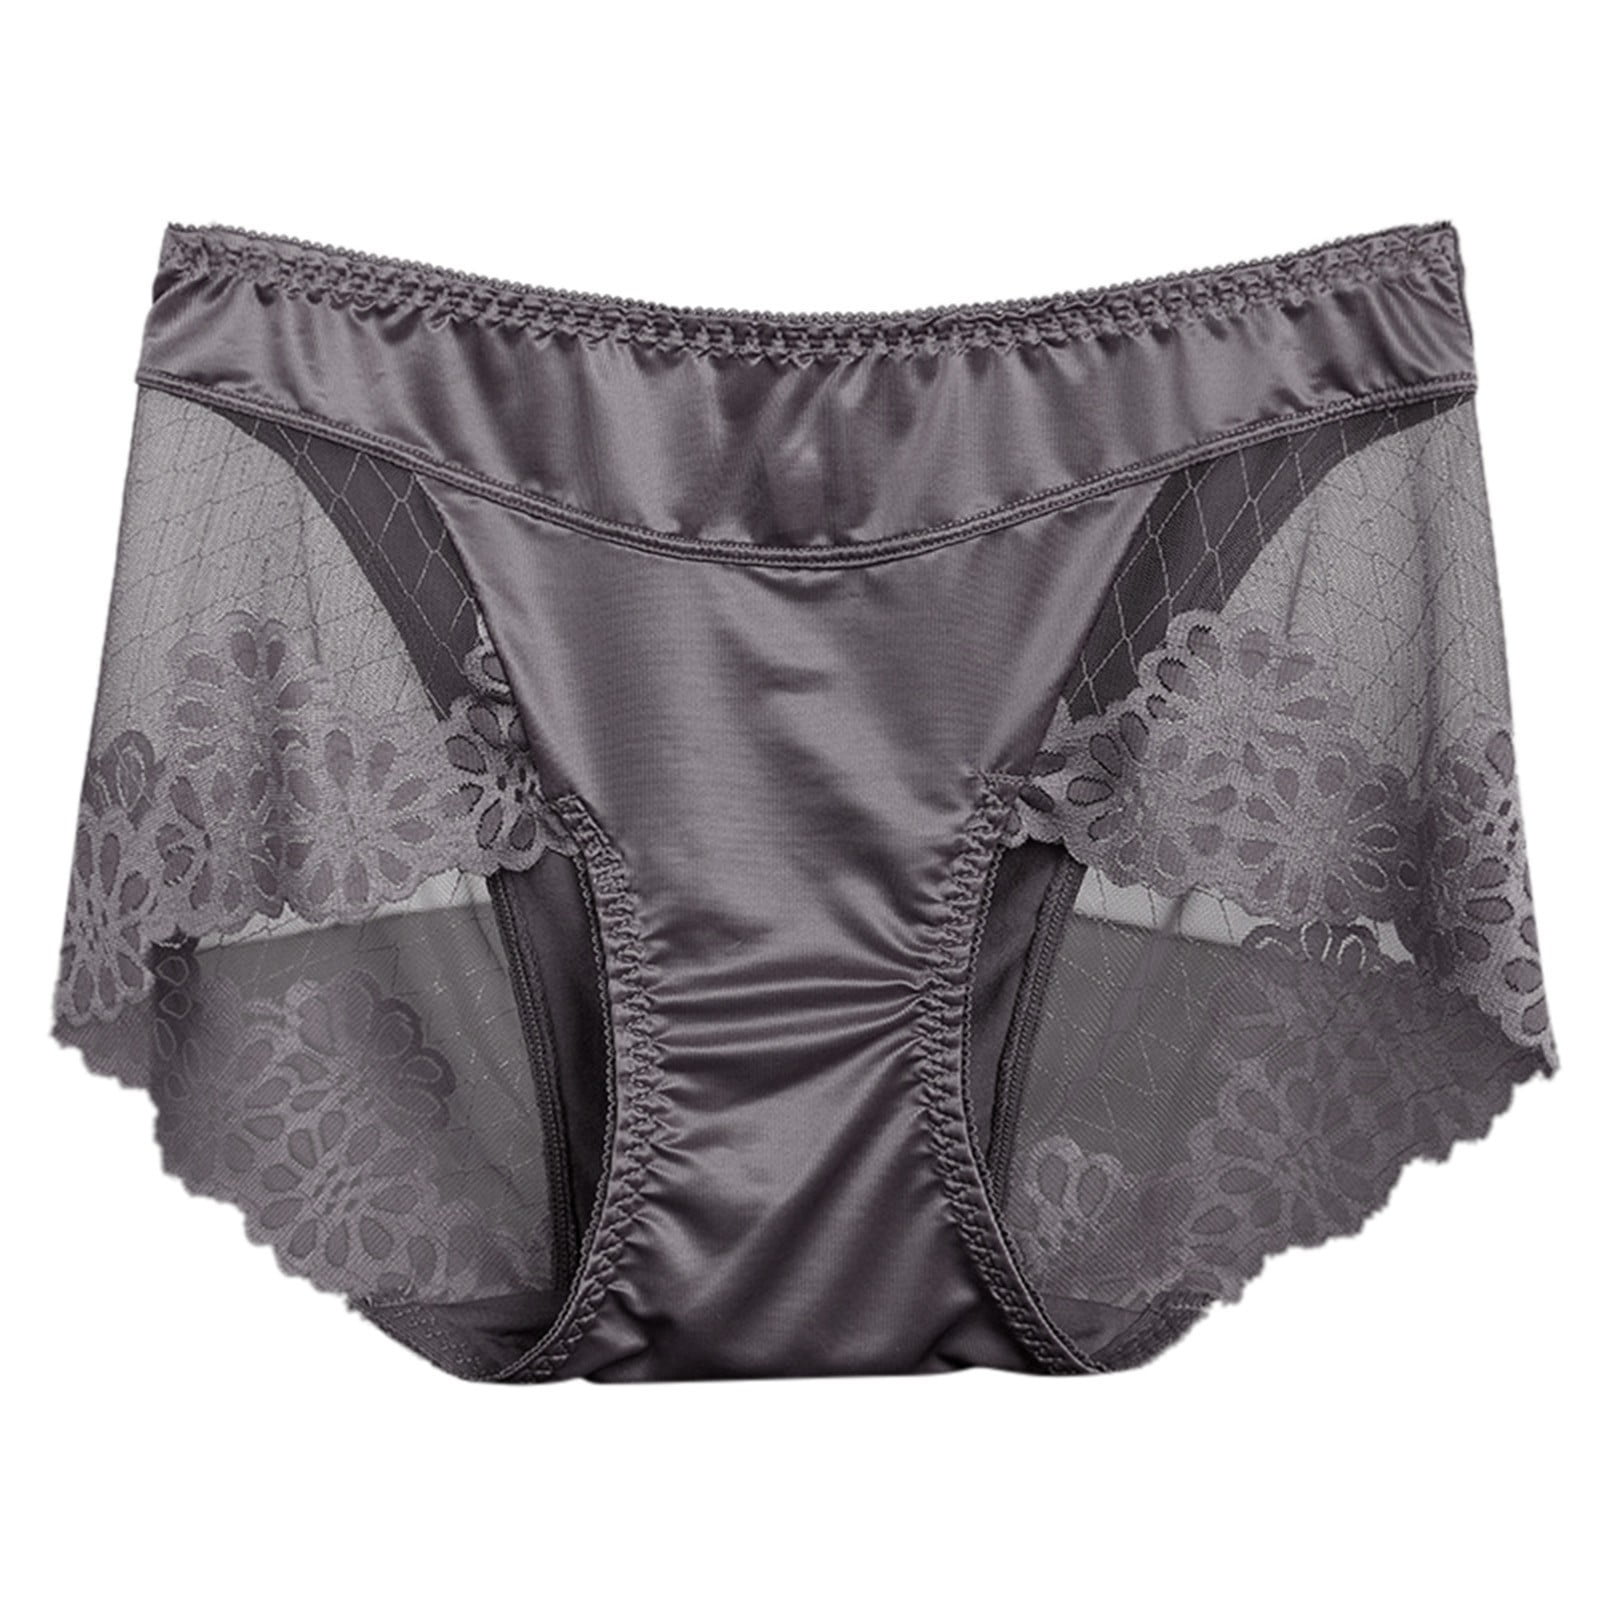 Best Deal for Kingtowag Waist Women's Transparent Underwear Lace Solid